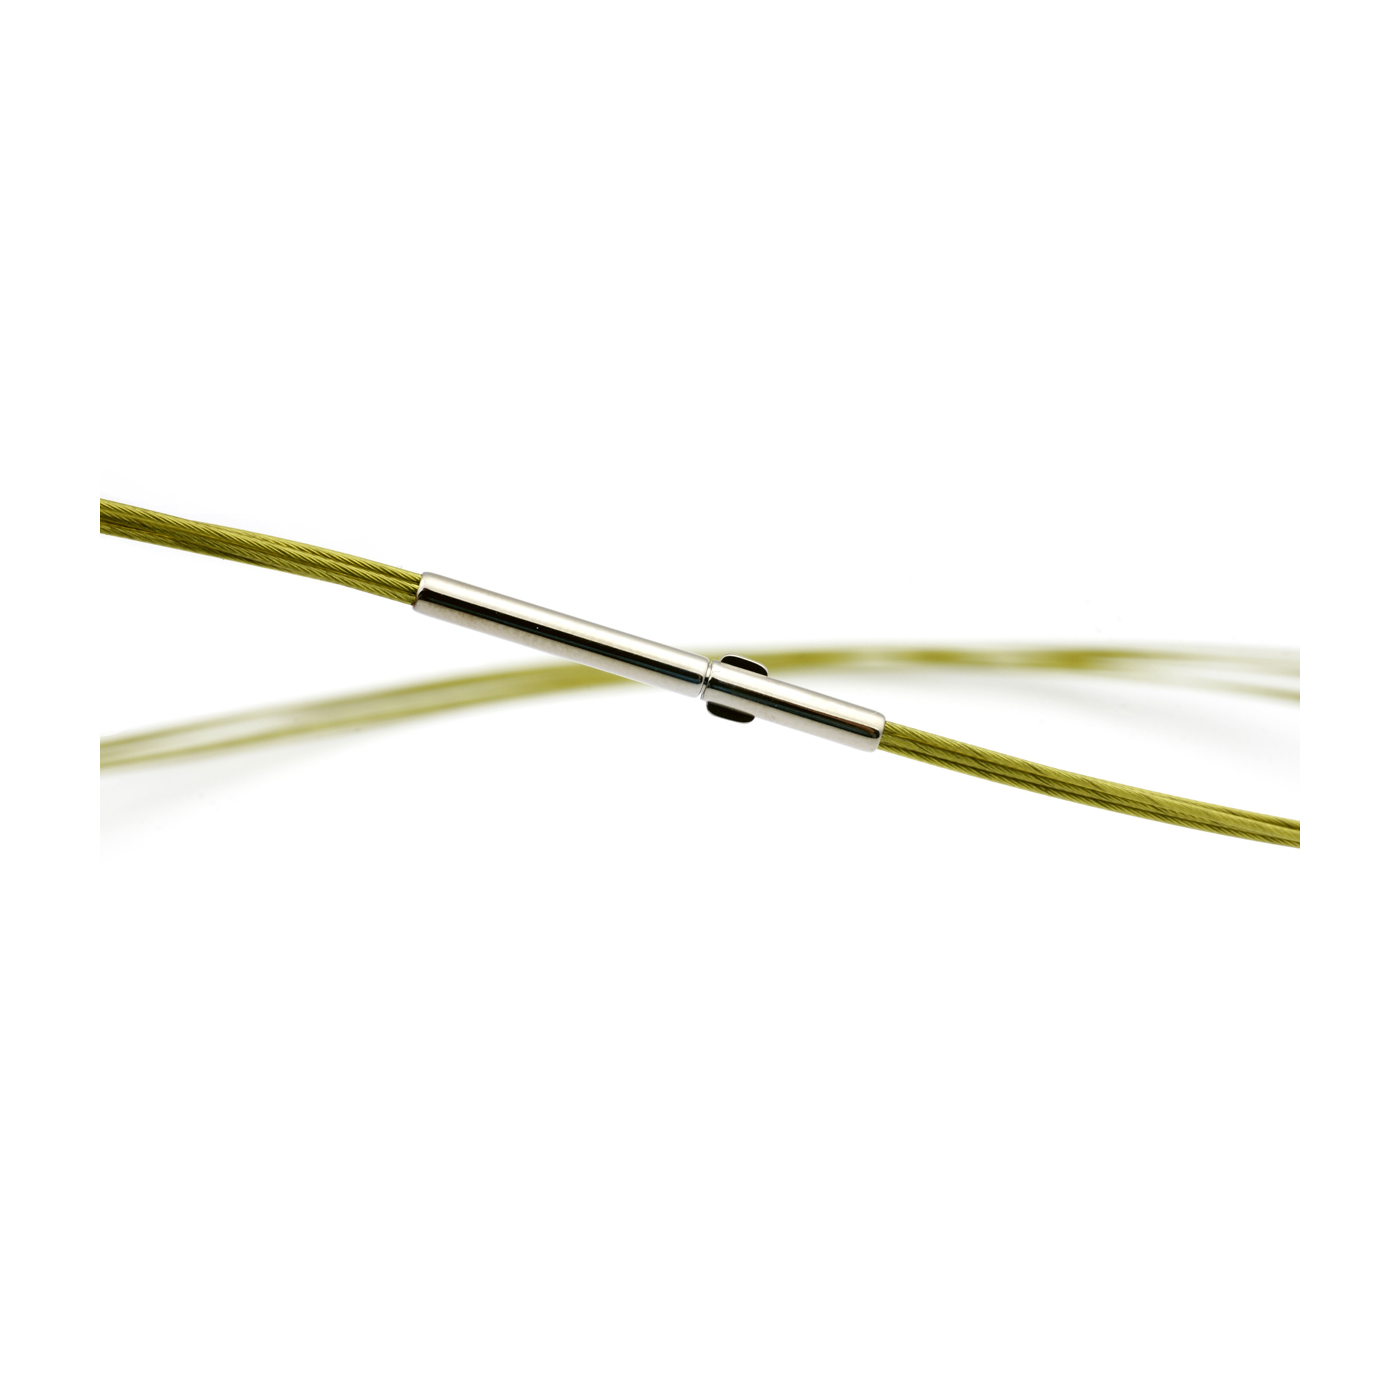 Seilcollier "Colour Cable", ES, grün-gold, 5-reihig, 42 cm - 1 Stück